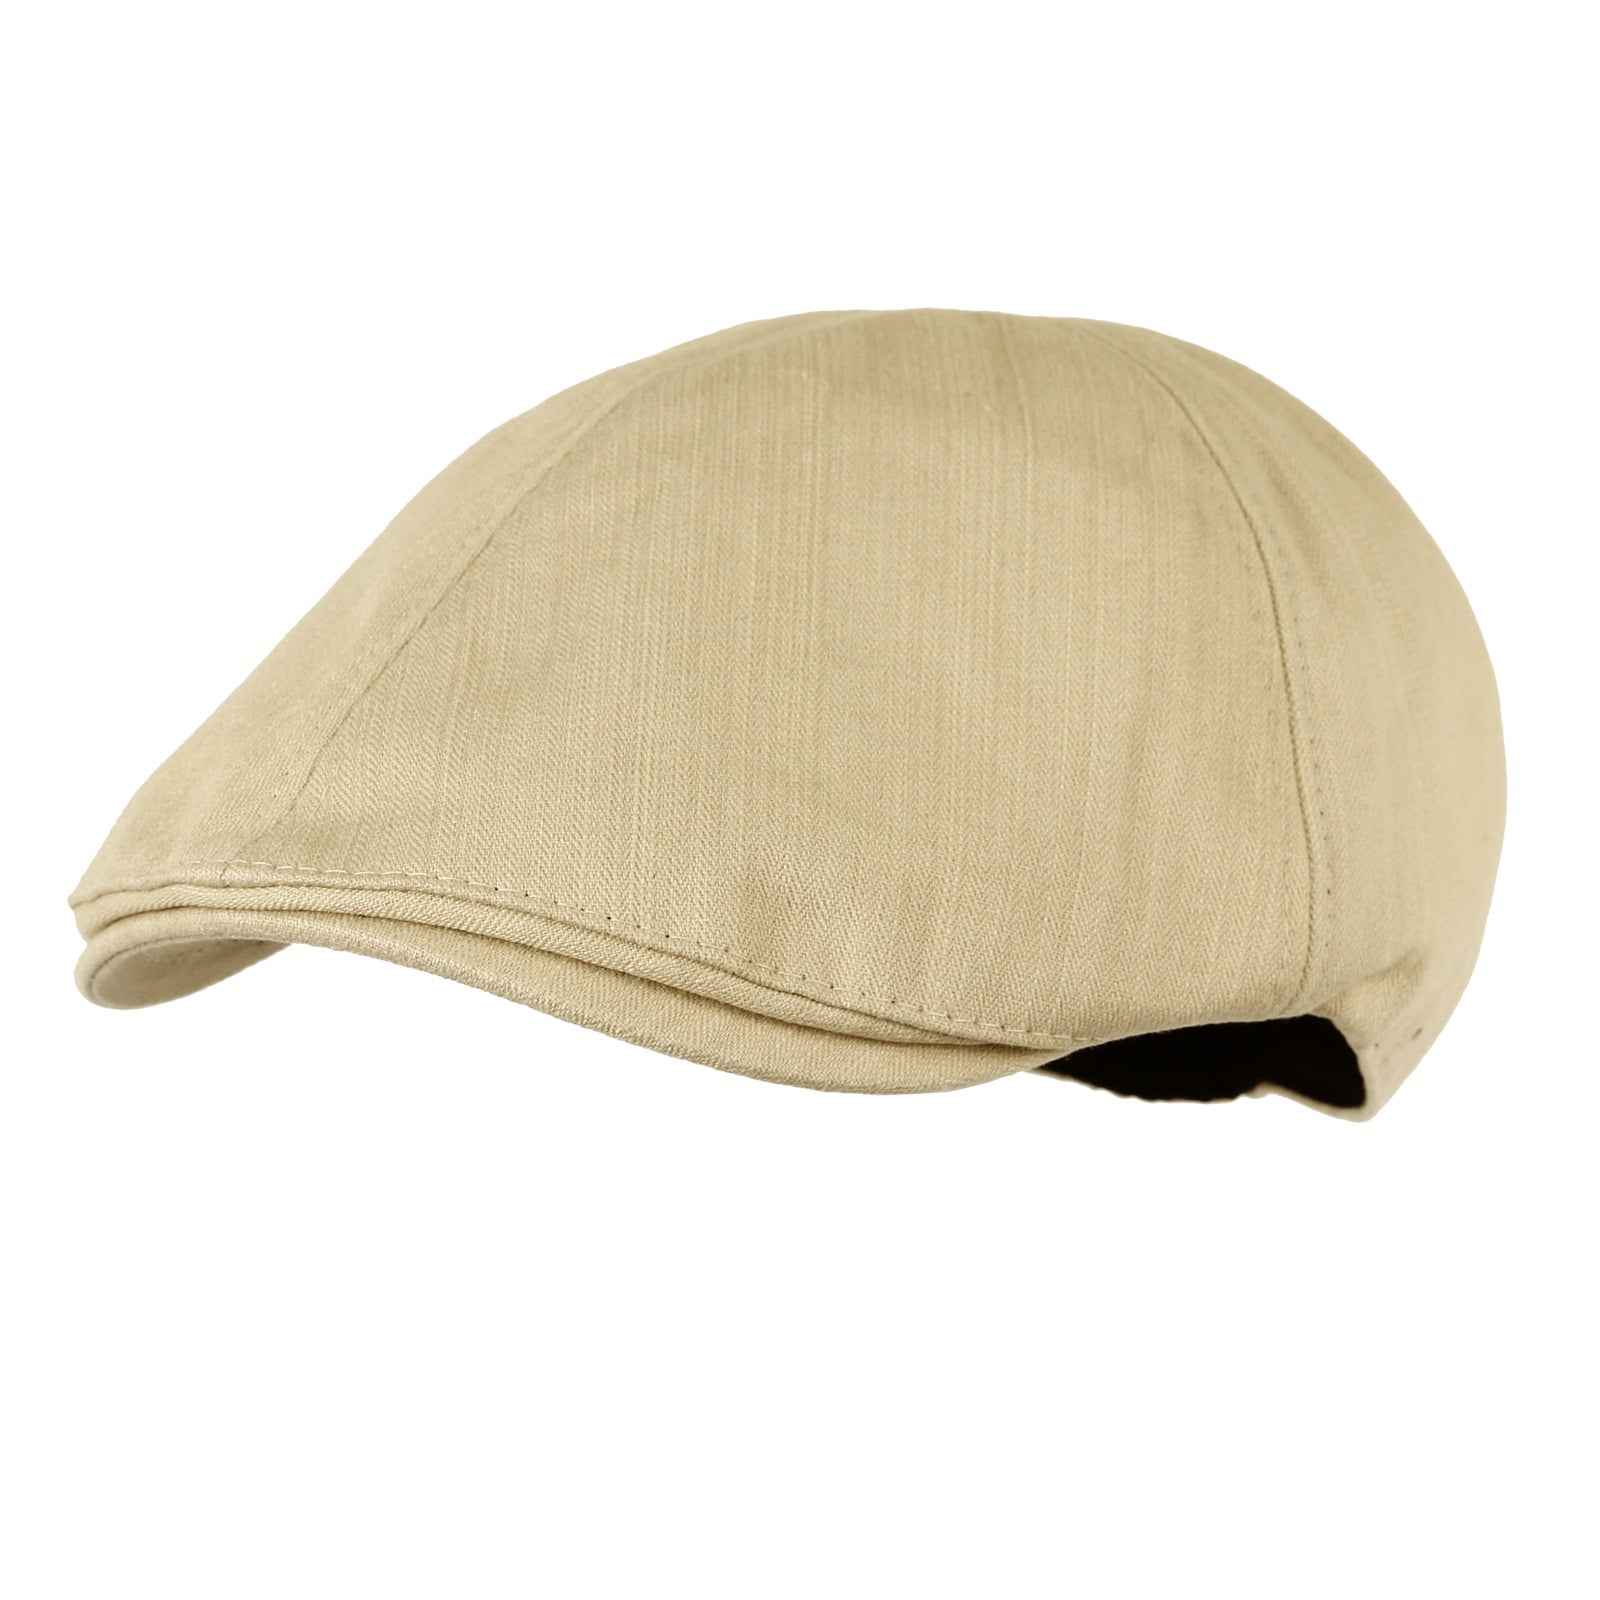 WITHMOONS Simple (Pink) SL3026 Hat Newsboy Flat Cap